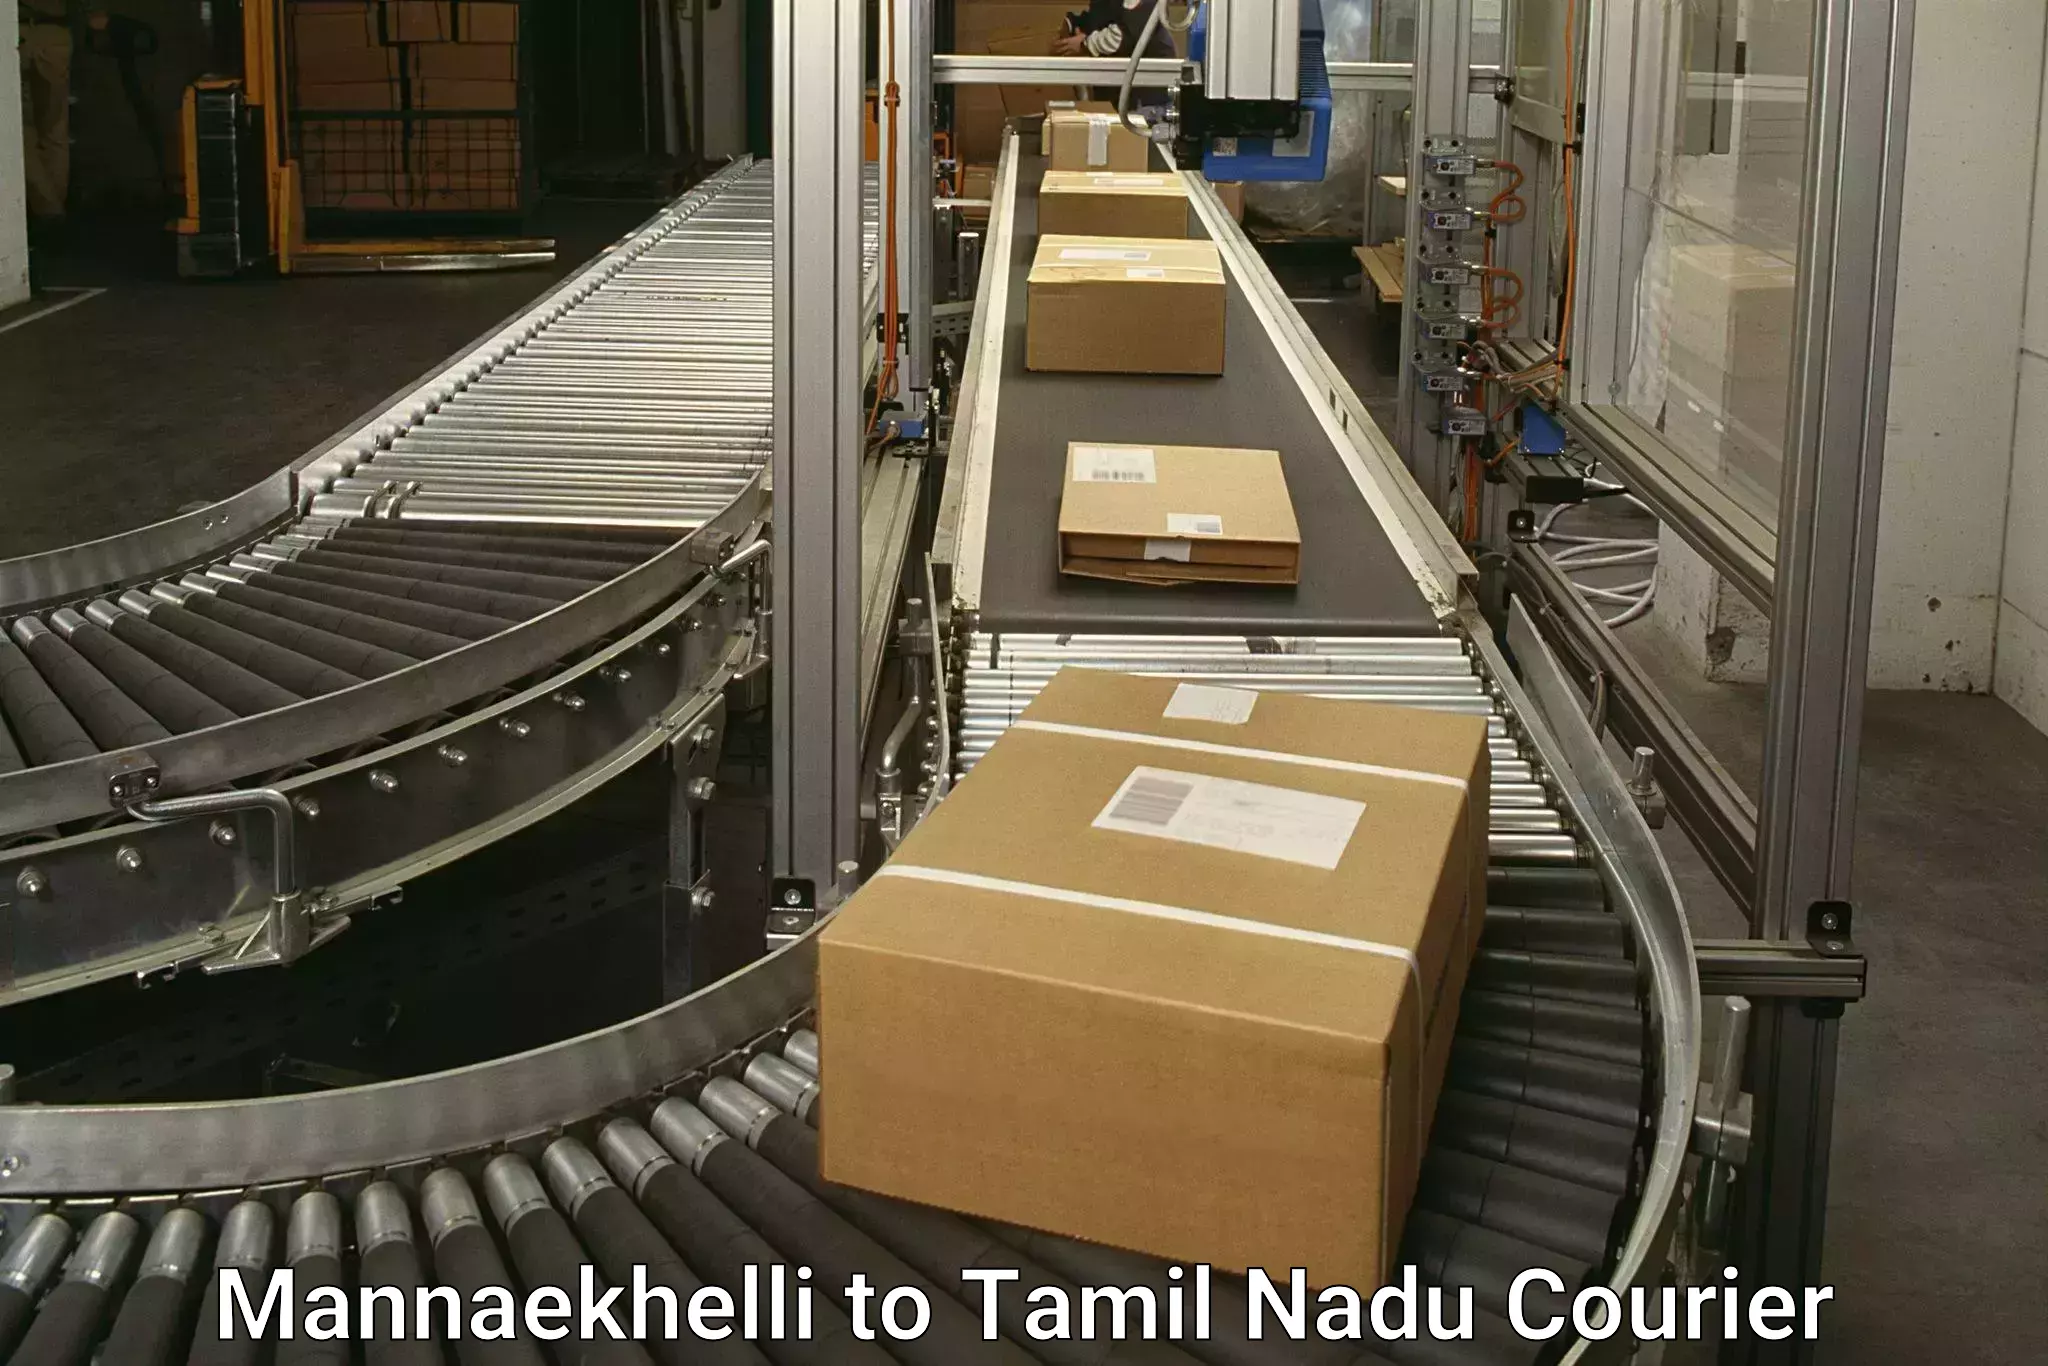 Courier service comparison Mannaekhelli to Chennai Port